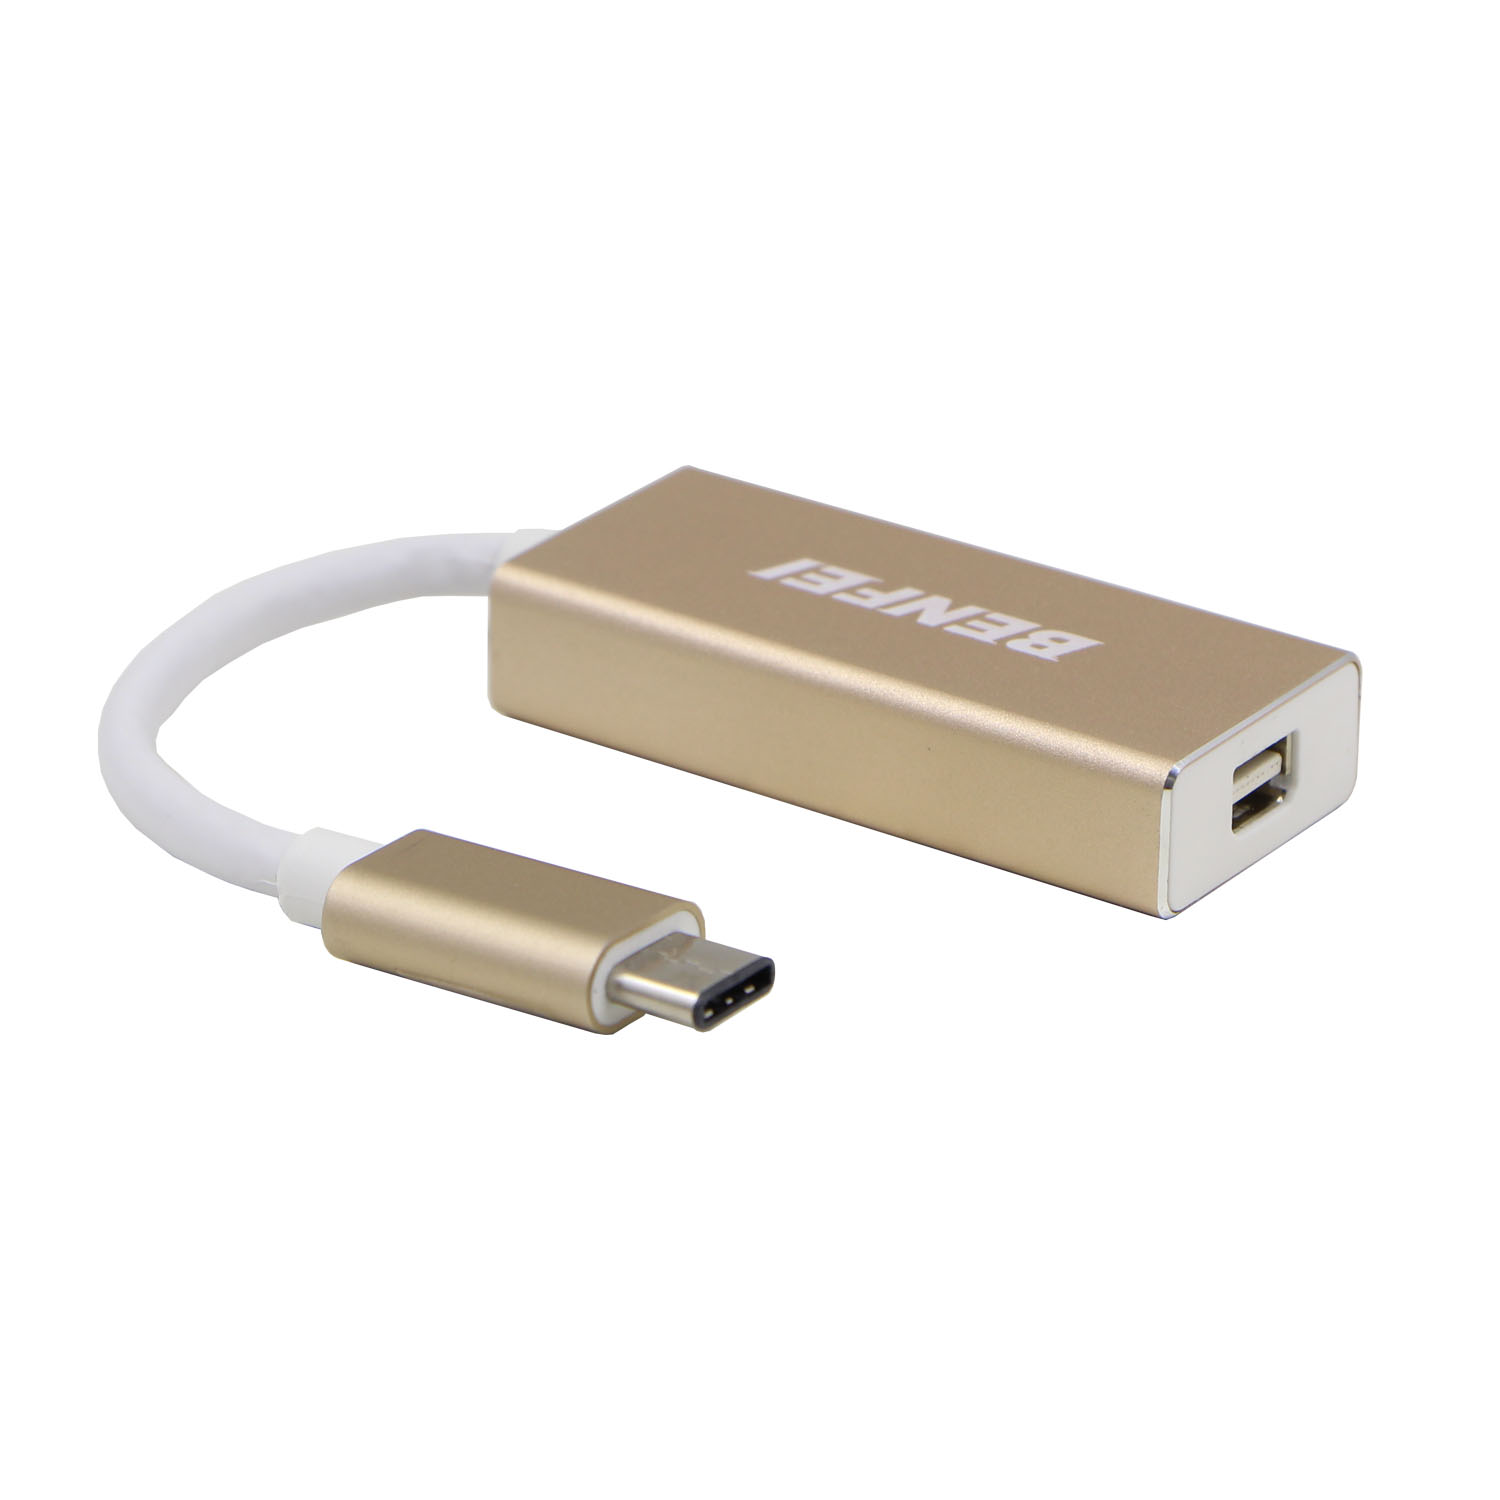 000269grey USB-C to Ethernet, Benfei USB Type-C (Thunderbolt 3) to